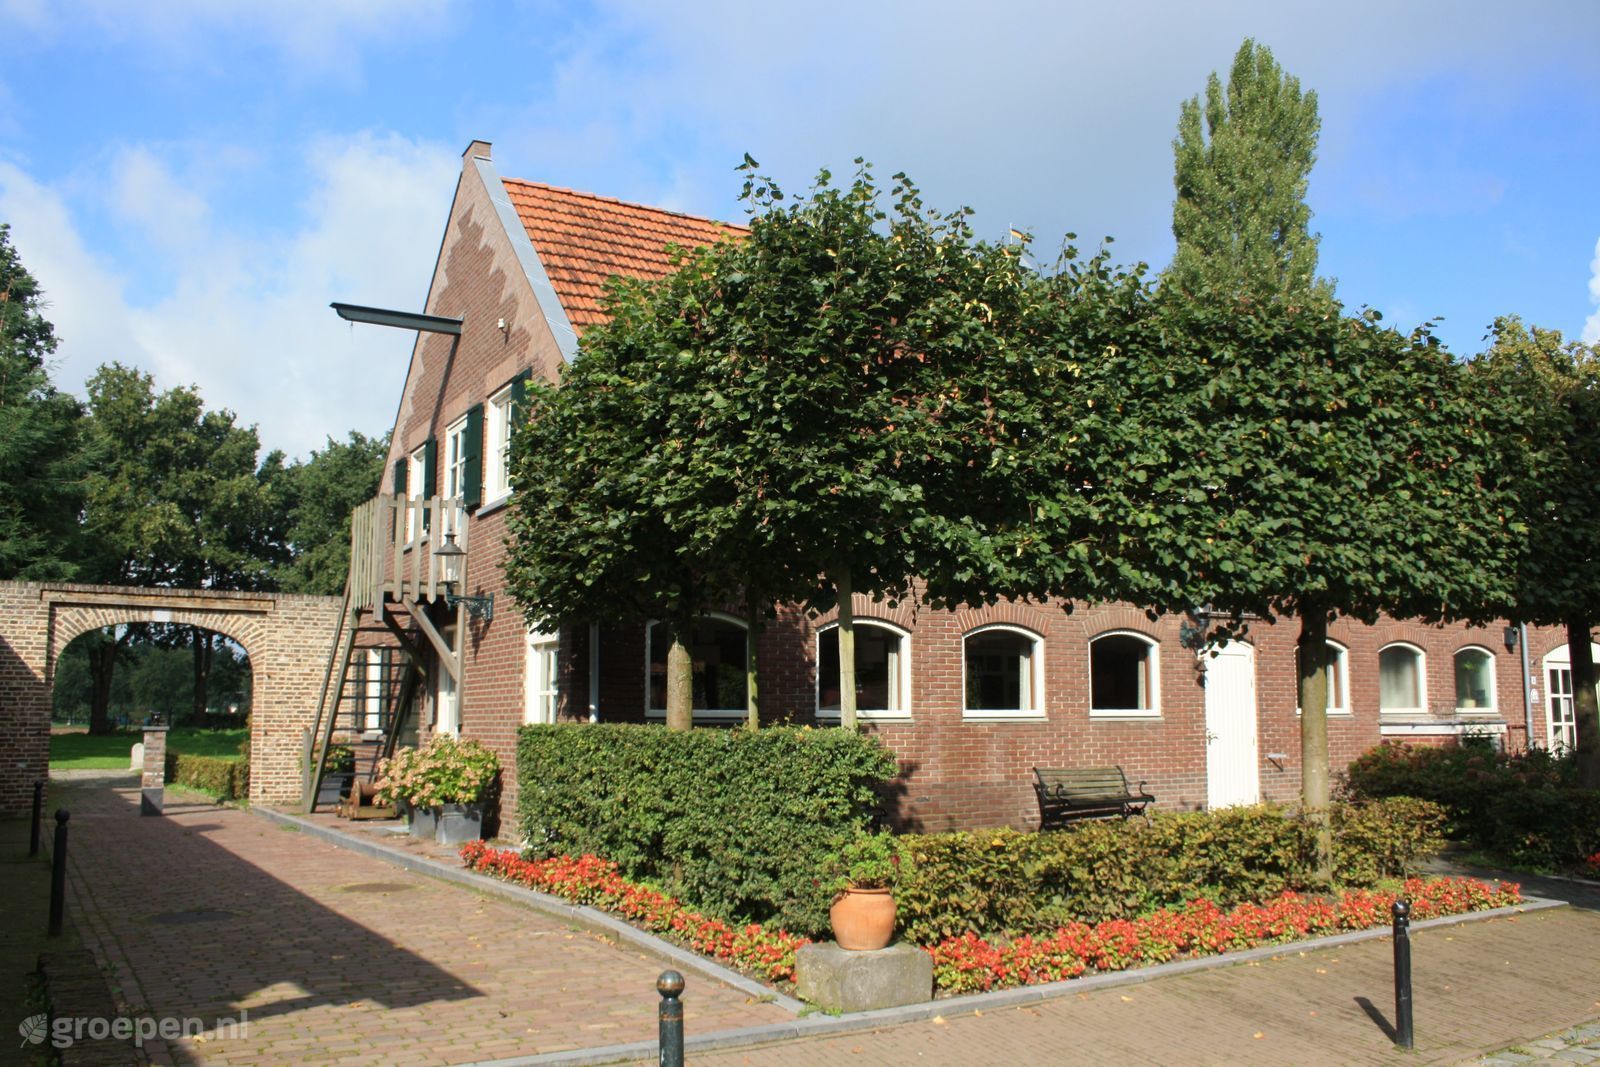 Vakantieboerderij Maasbree in Maasbree - Limburg, Nederland foto 8462590